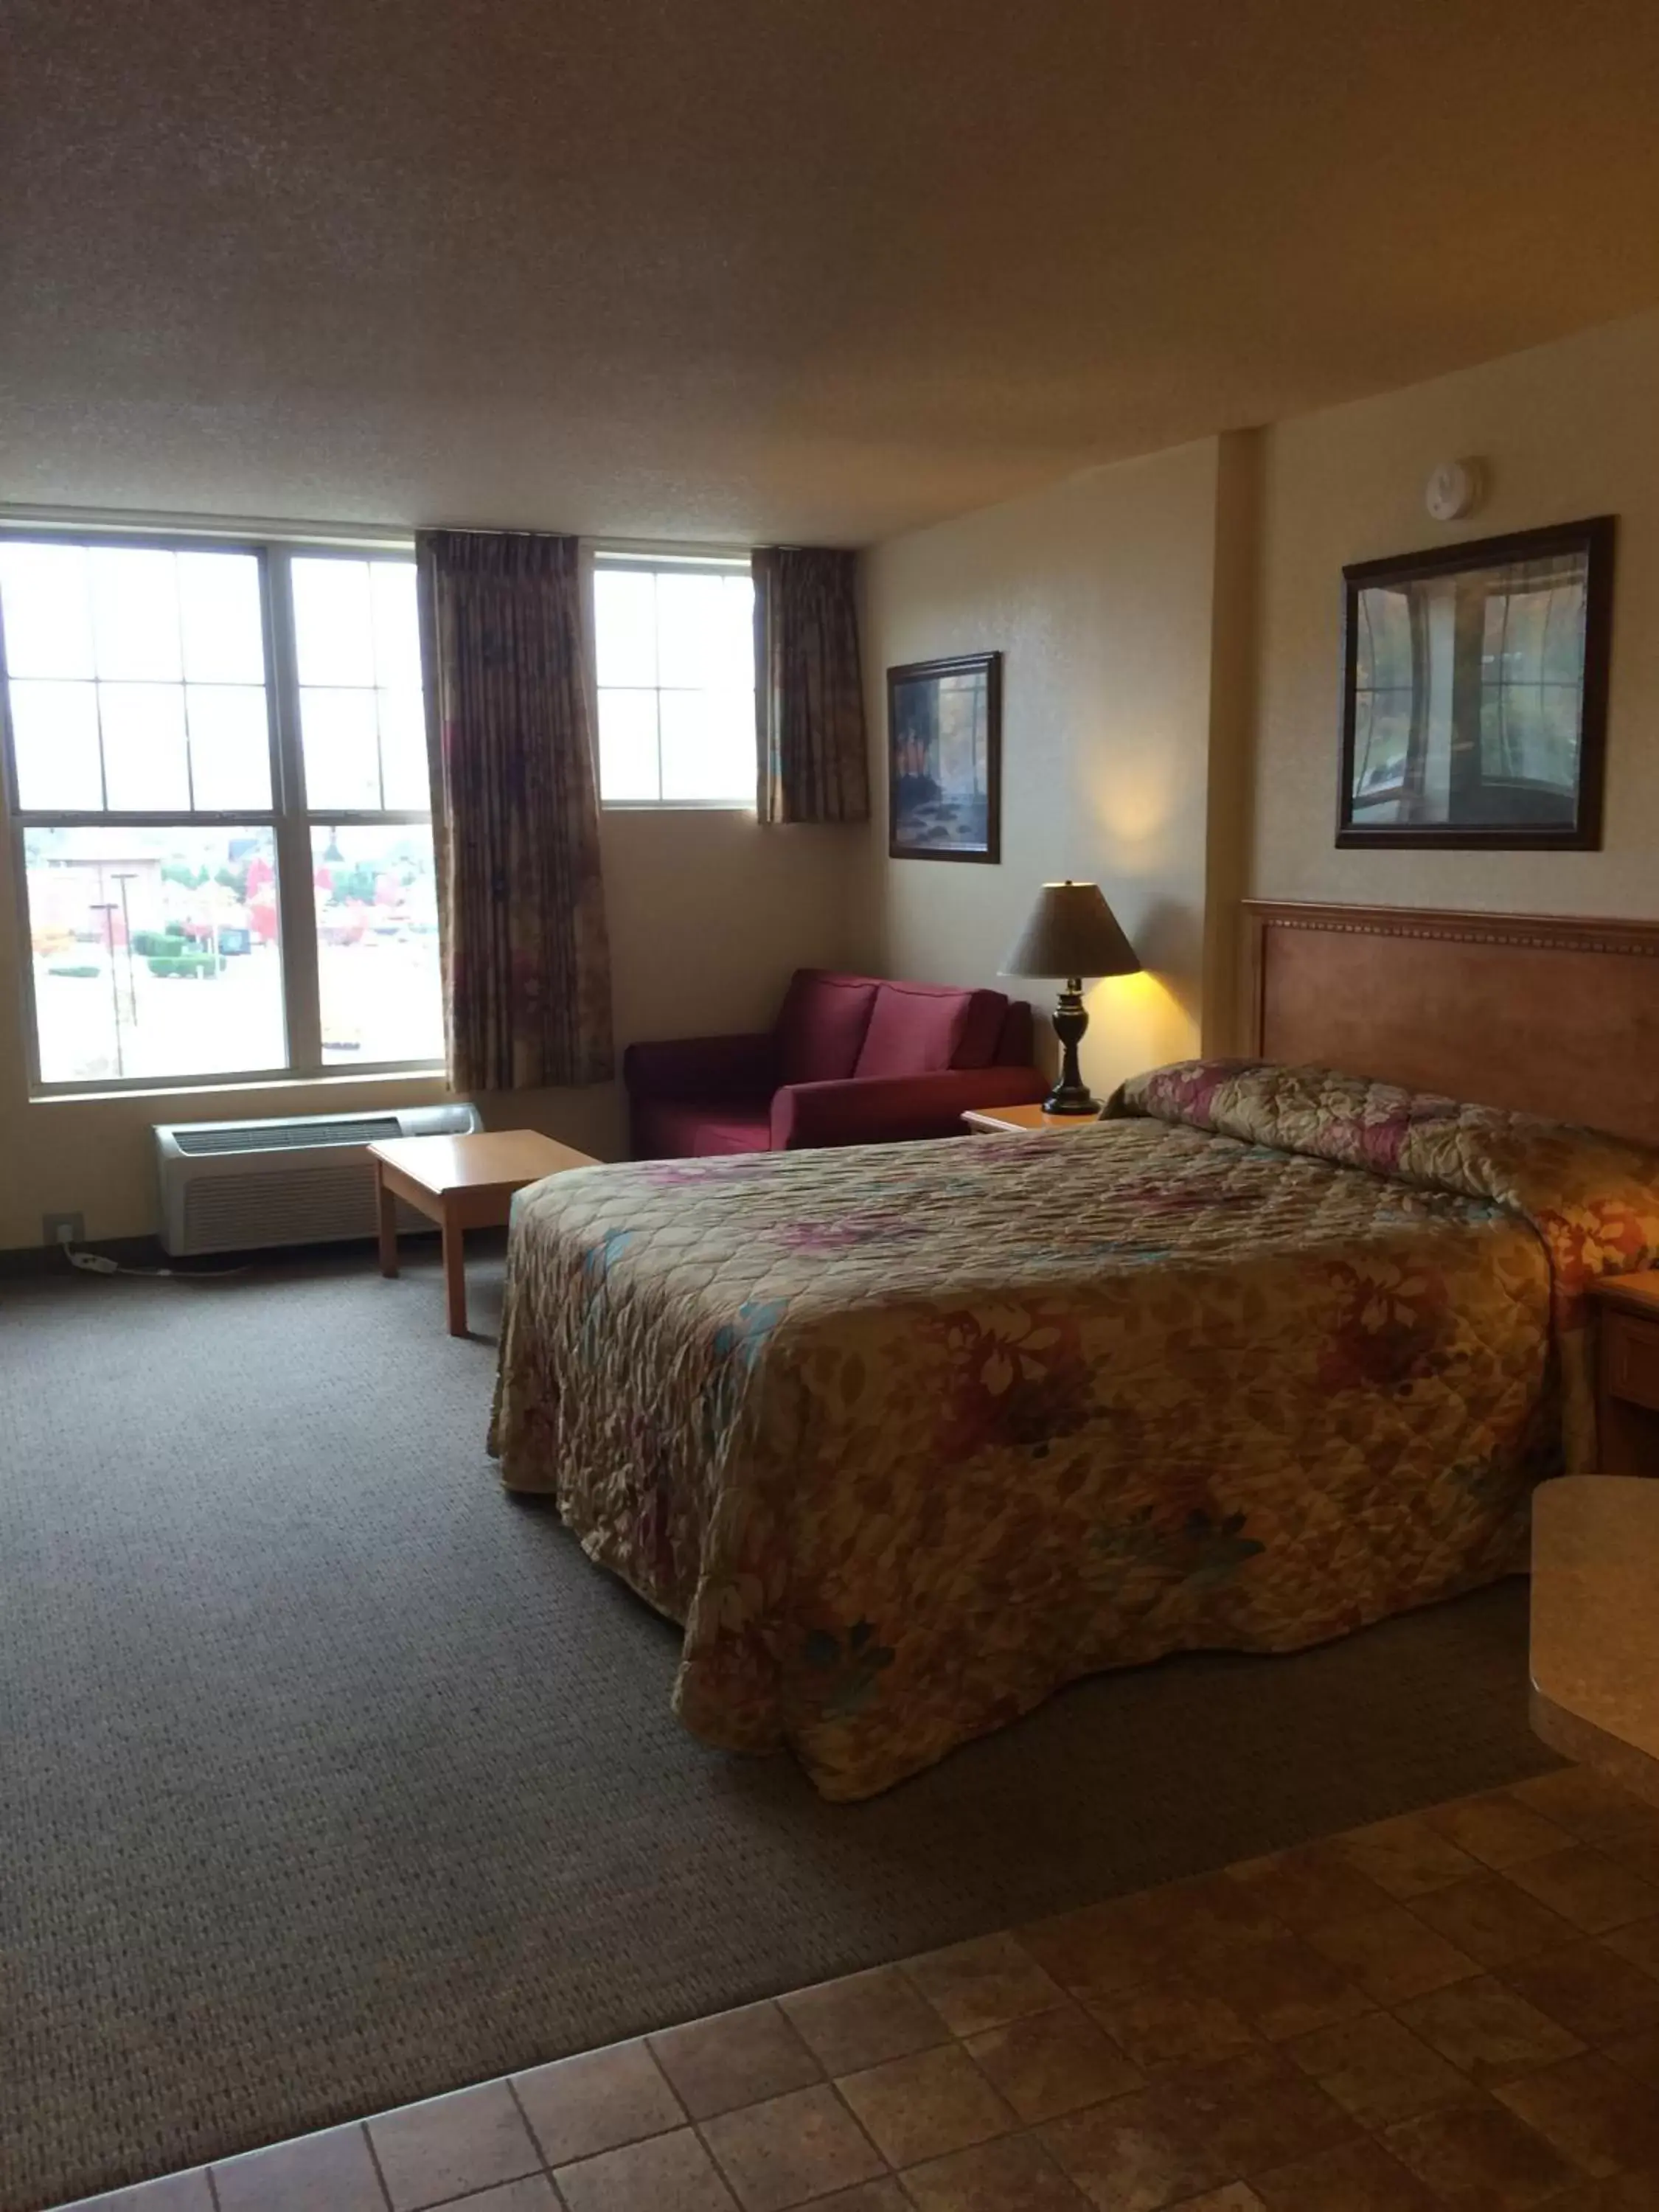 Bed, Room Photo in Grand Smokies Resort Lodge Pigeon Forge